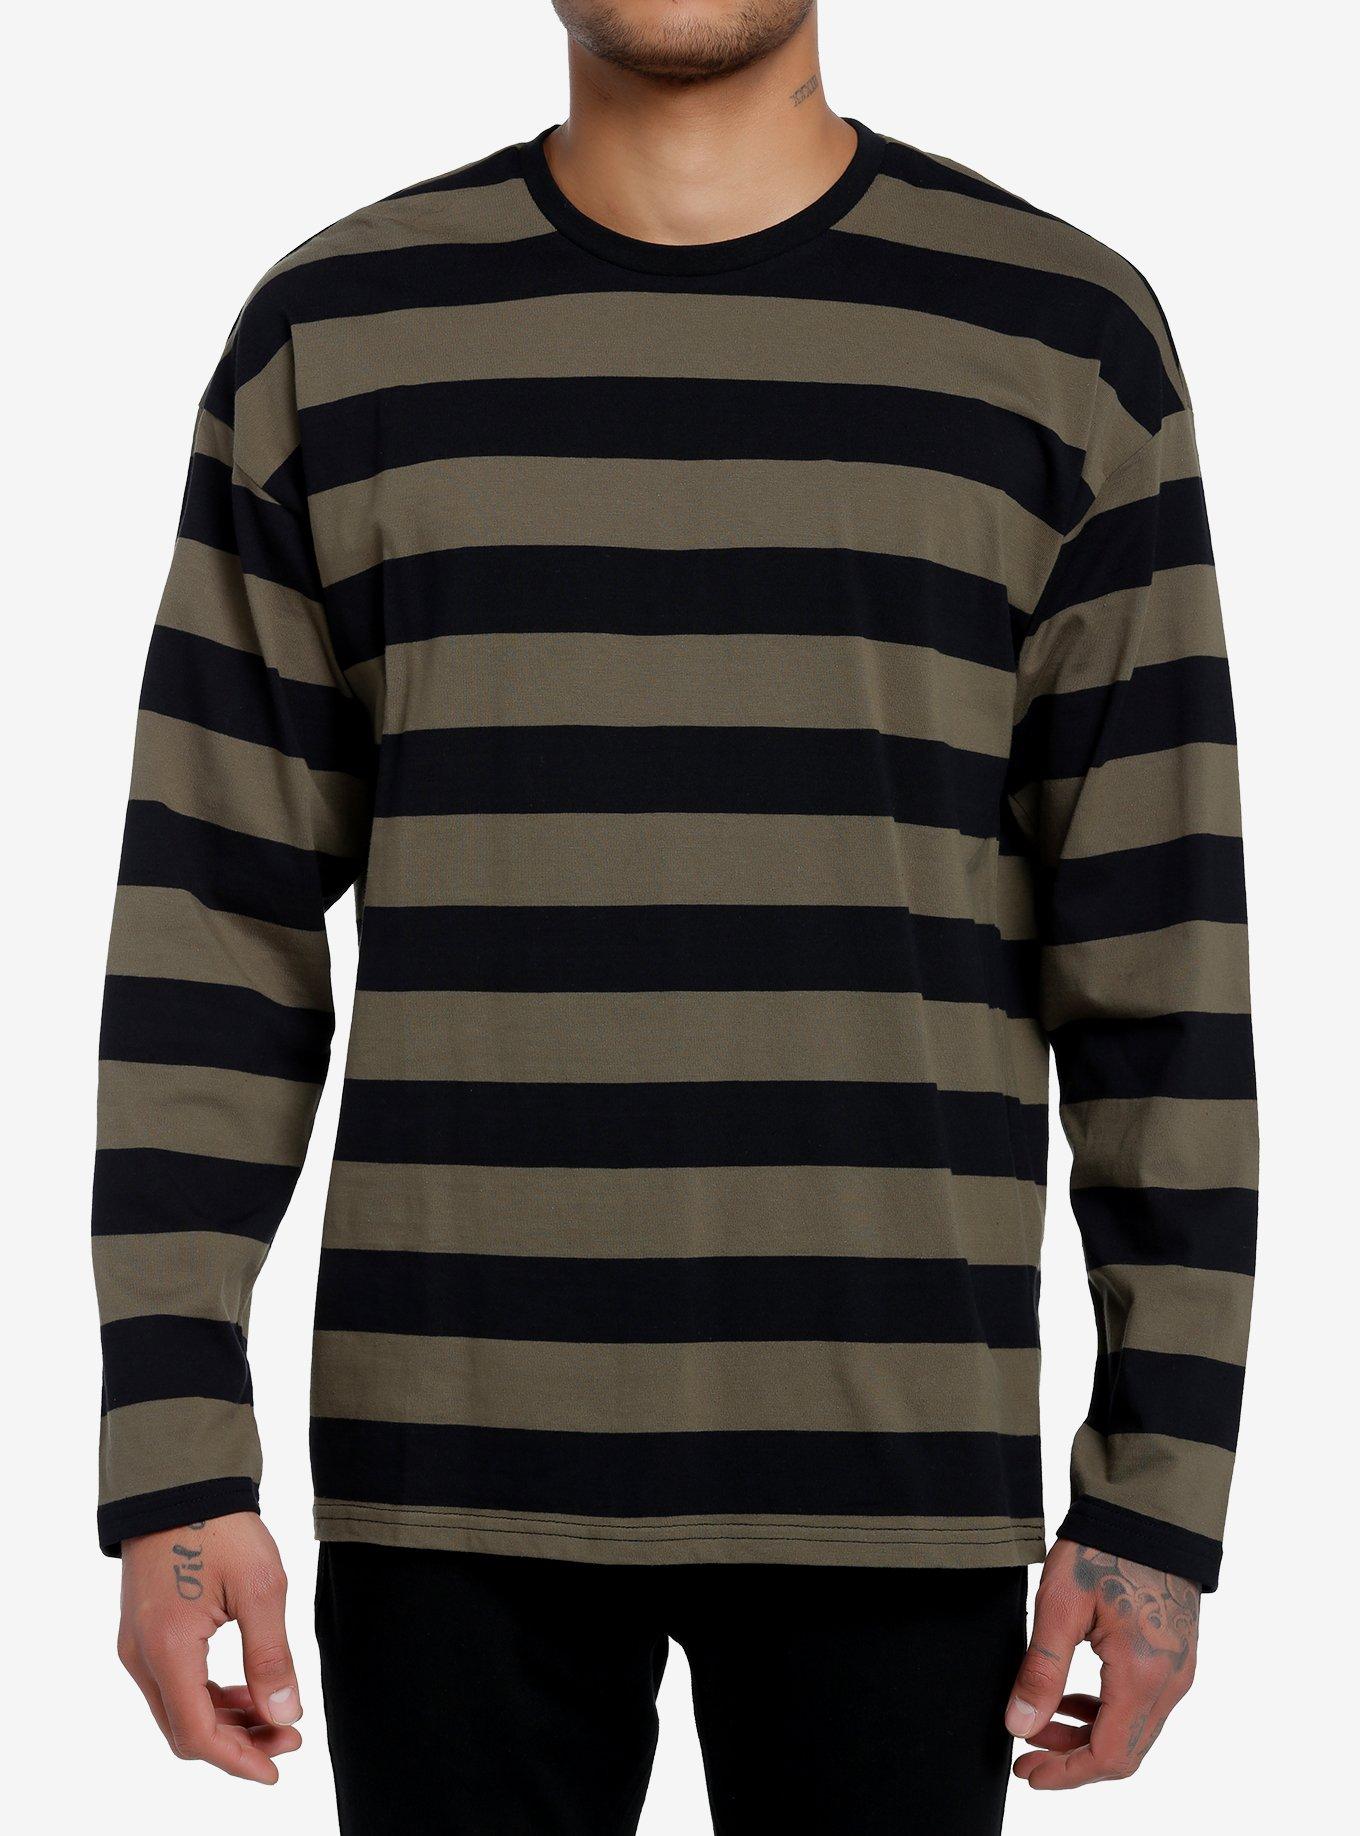 Social Collision Olive & Black Stripe Long-Sleeve T-Shirt | Hot Topic